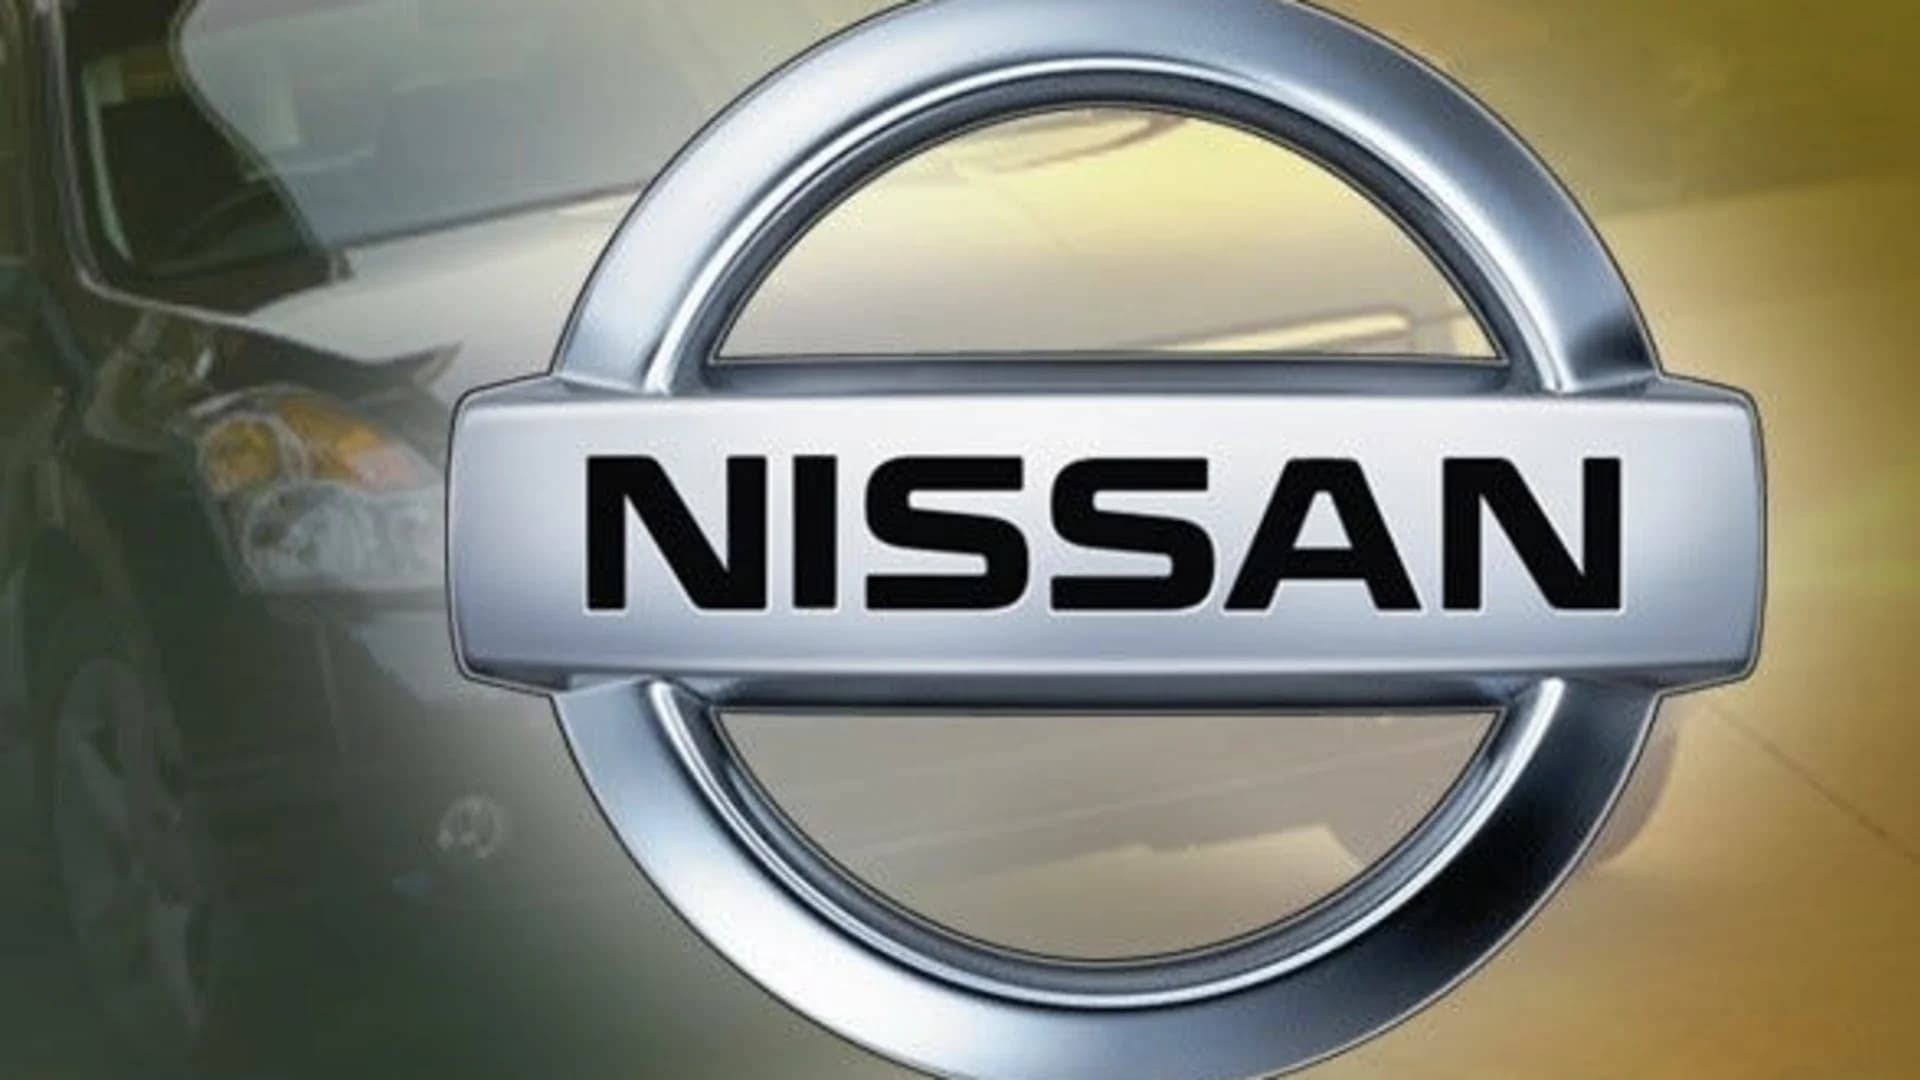 Nissan recalls 1.3M vehicles to fix backup camera display